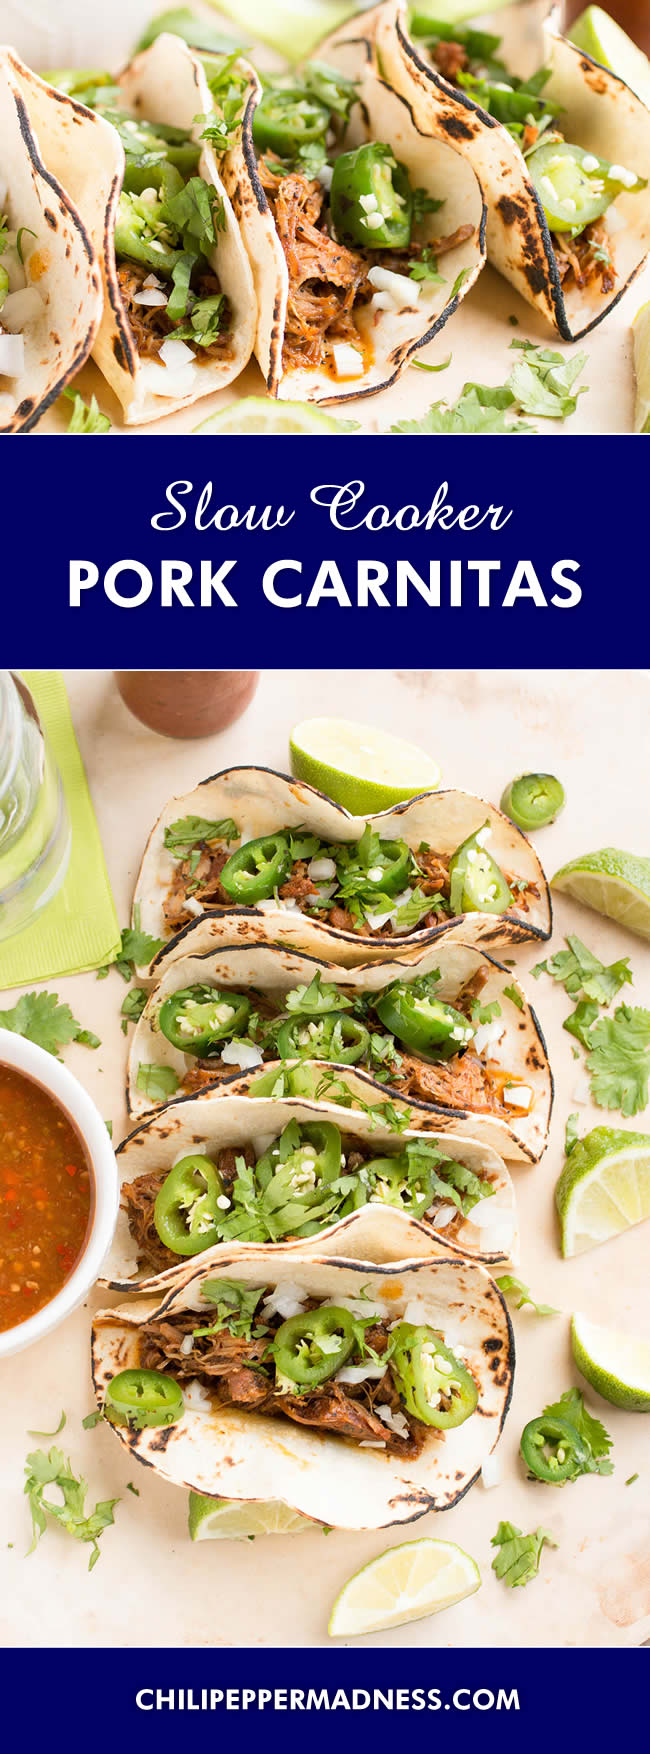 Slow Cooker Pork Carnitas (Crispy Mexican Pulled Pork Tacos) - Recipe